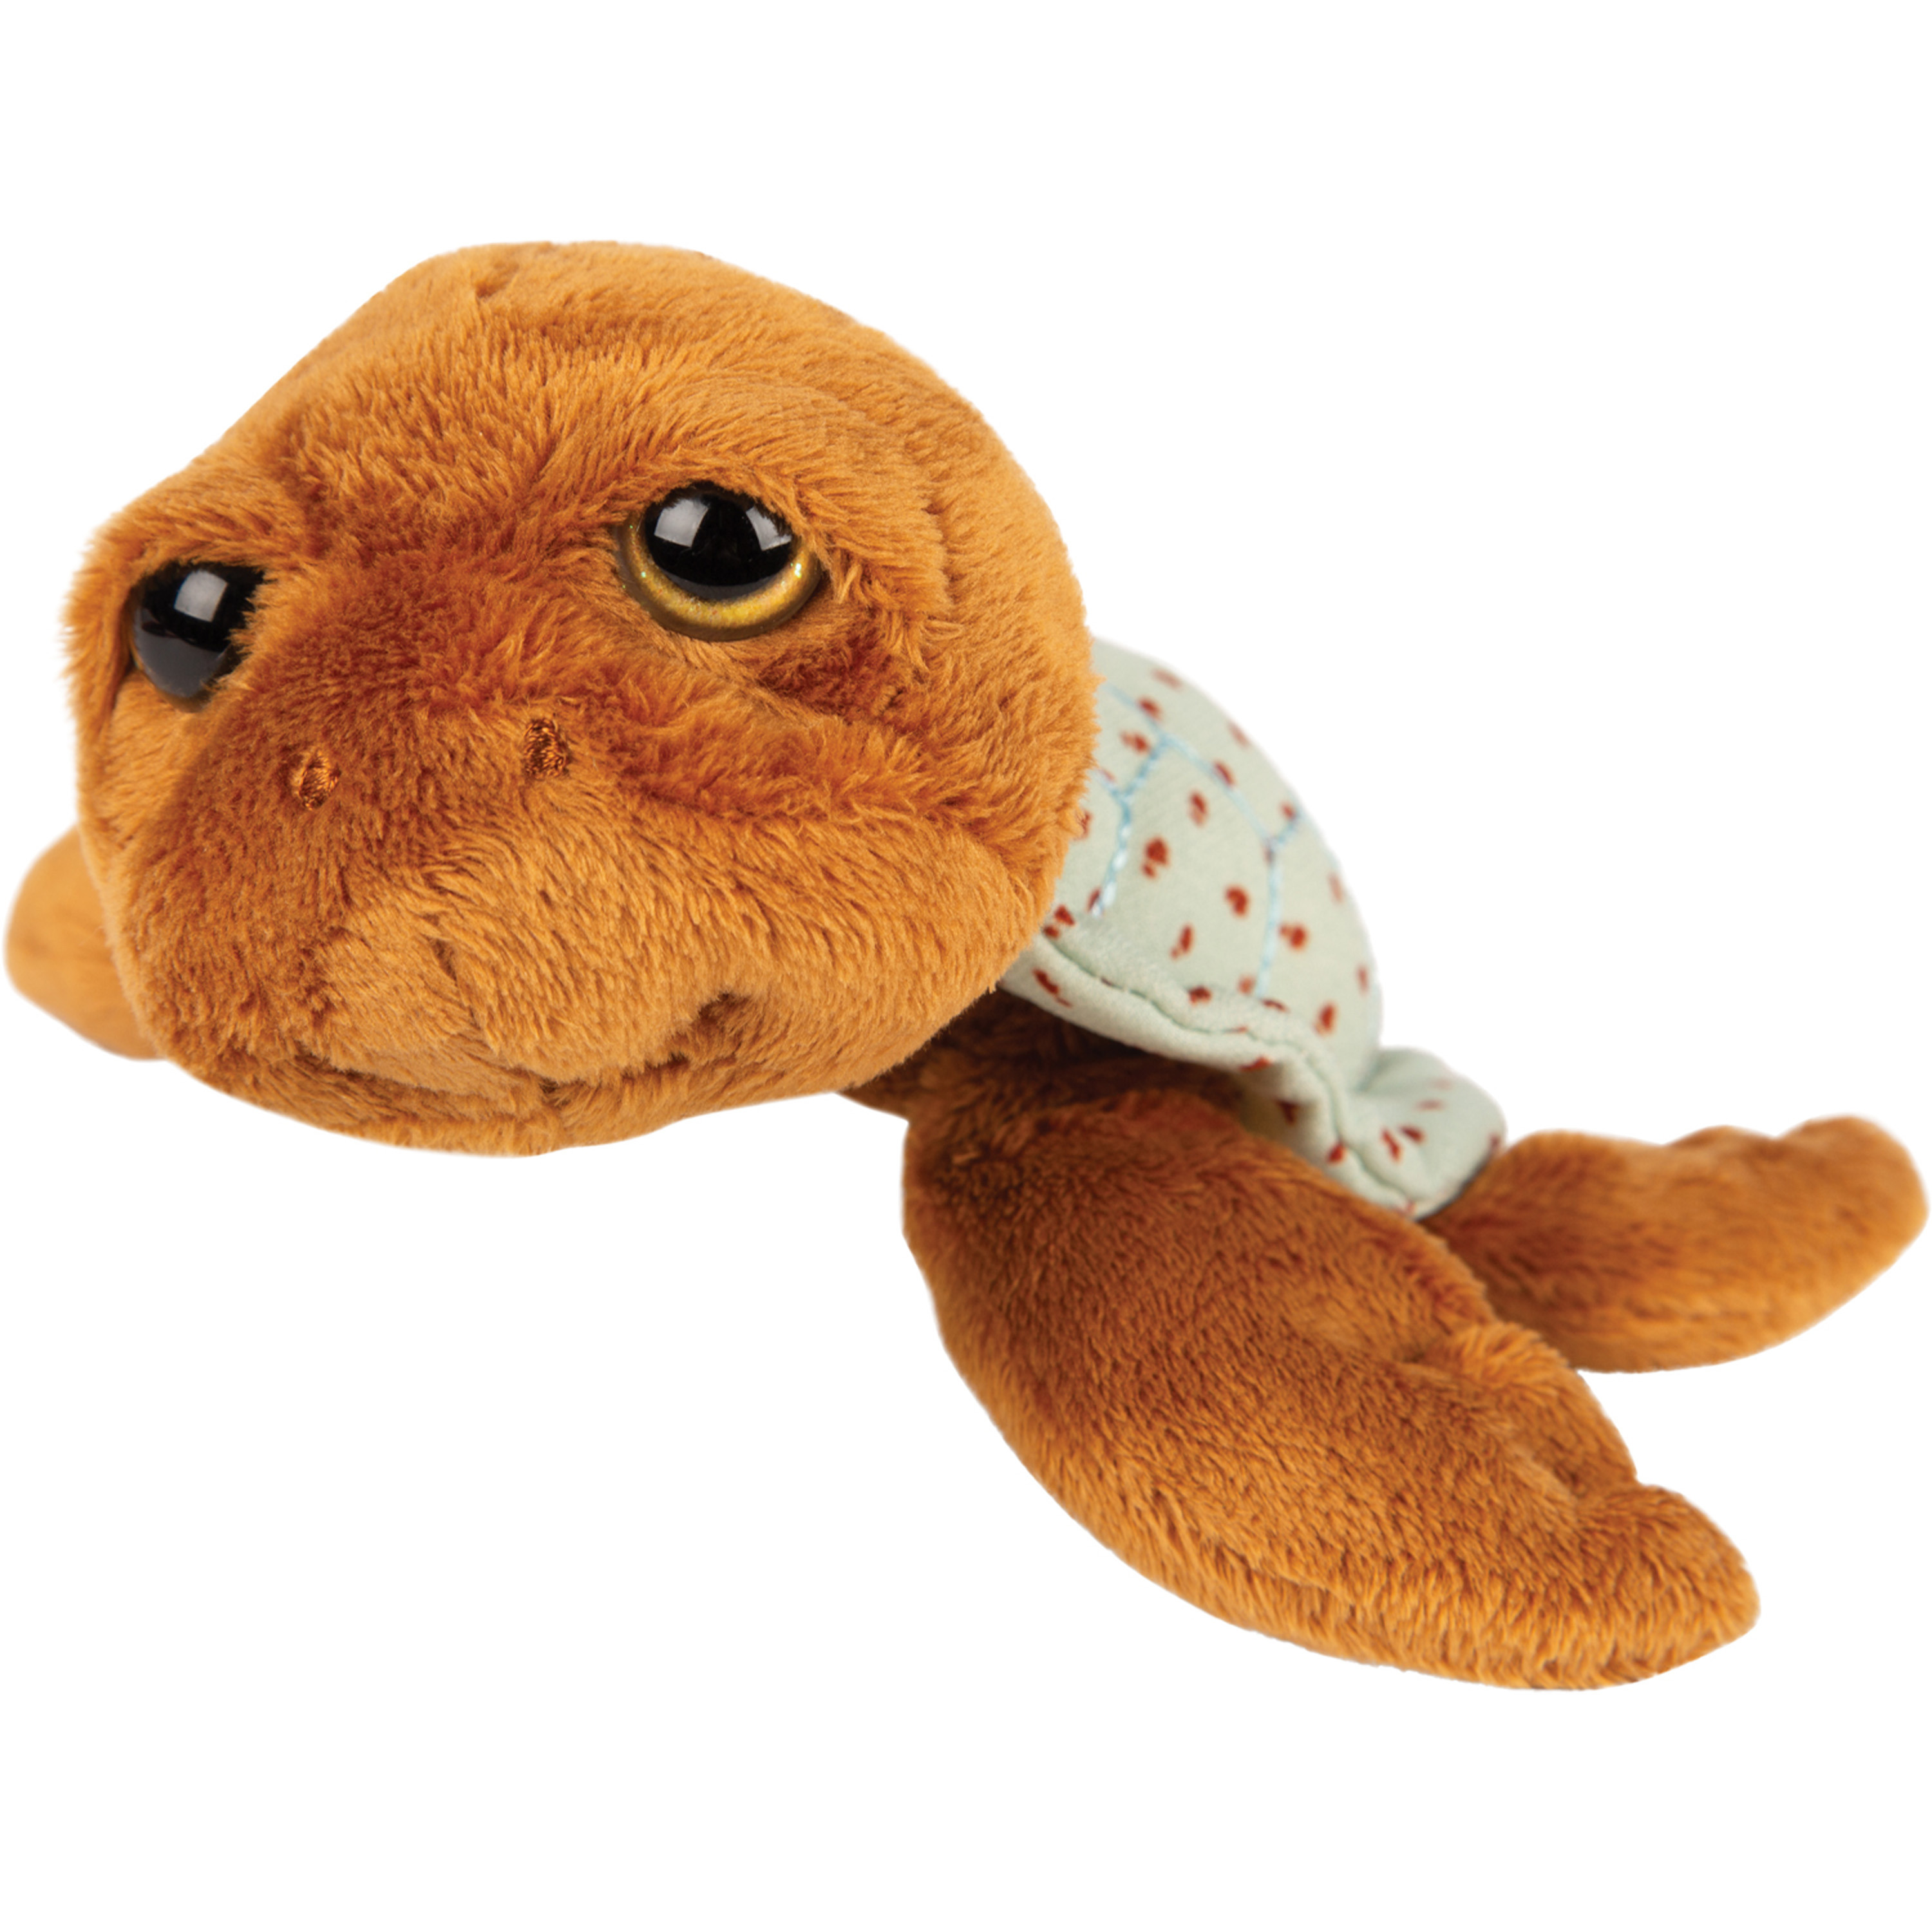 Suki Gifts pluche zeeschildpad Jules knuffeldier - cute eyes - donkerbruin - 14 cm